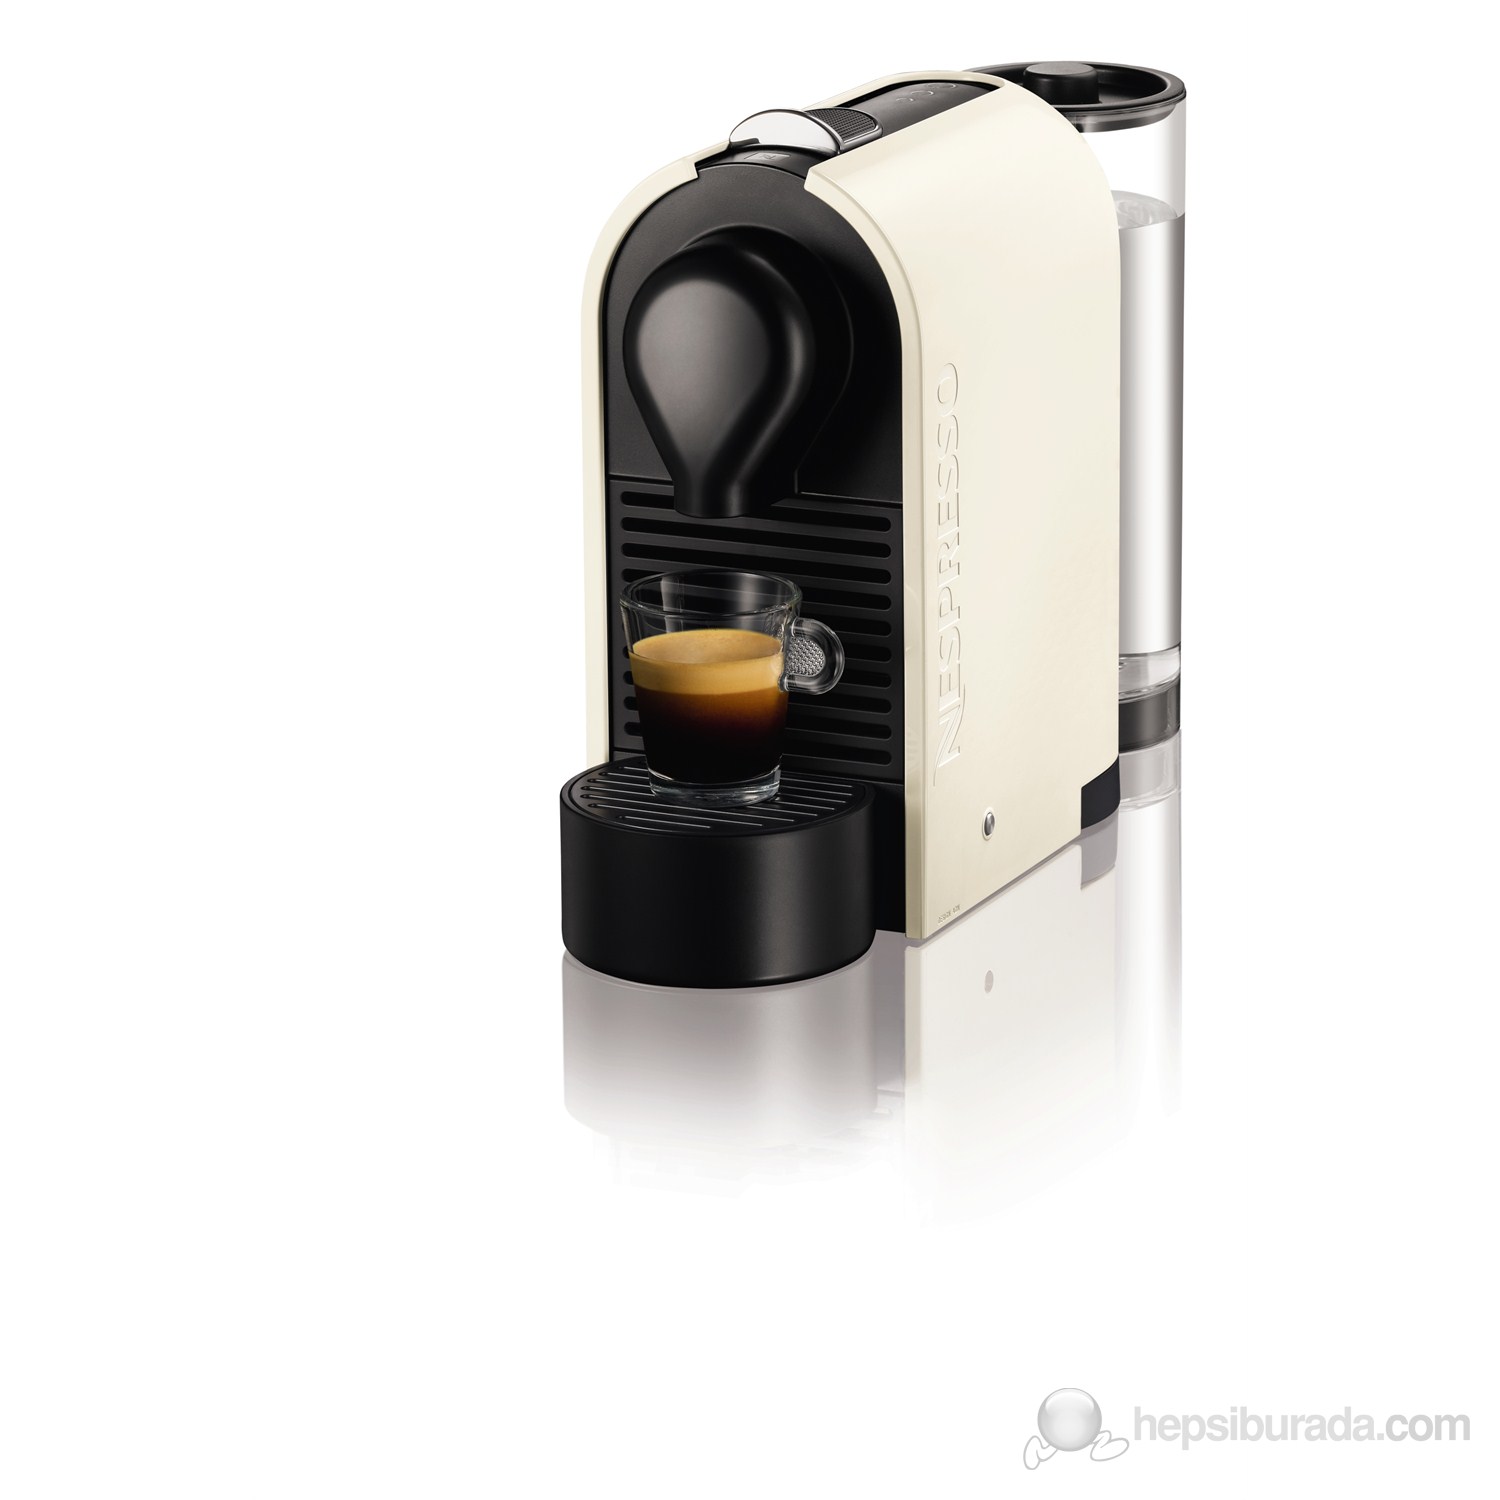 Nespresso U C50 Kahve Makinesi - Krem Renkli